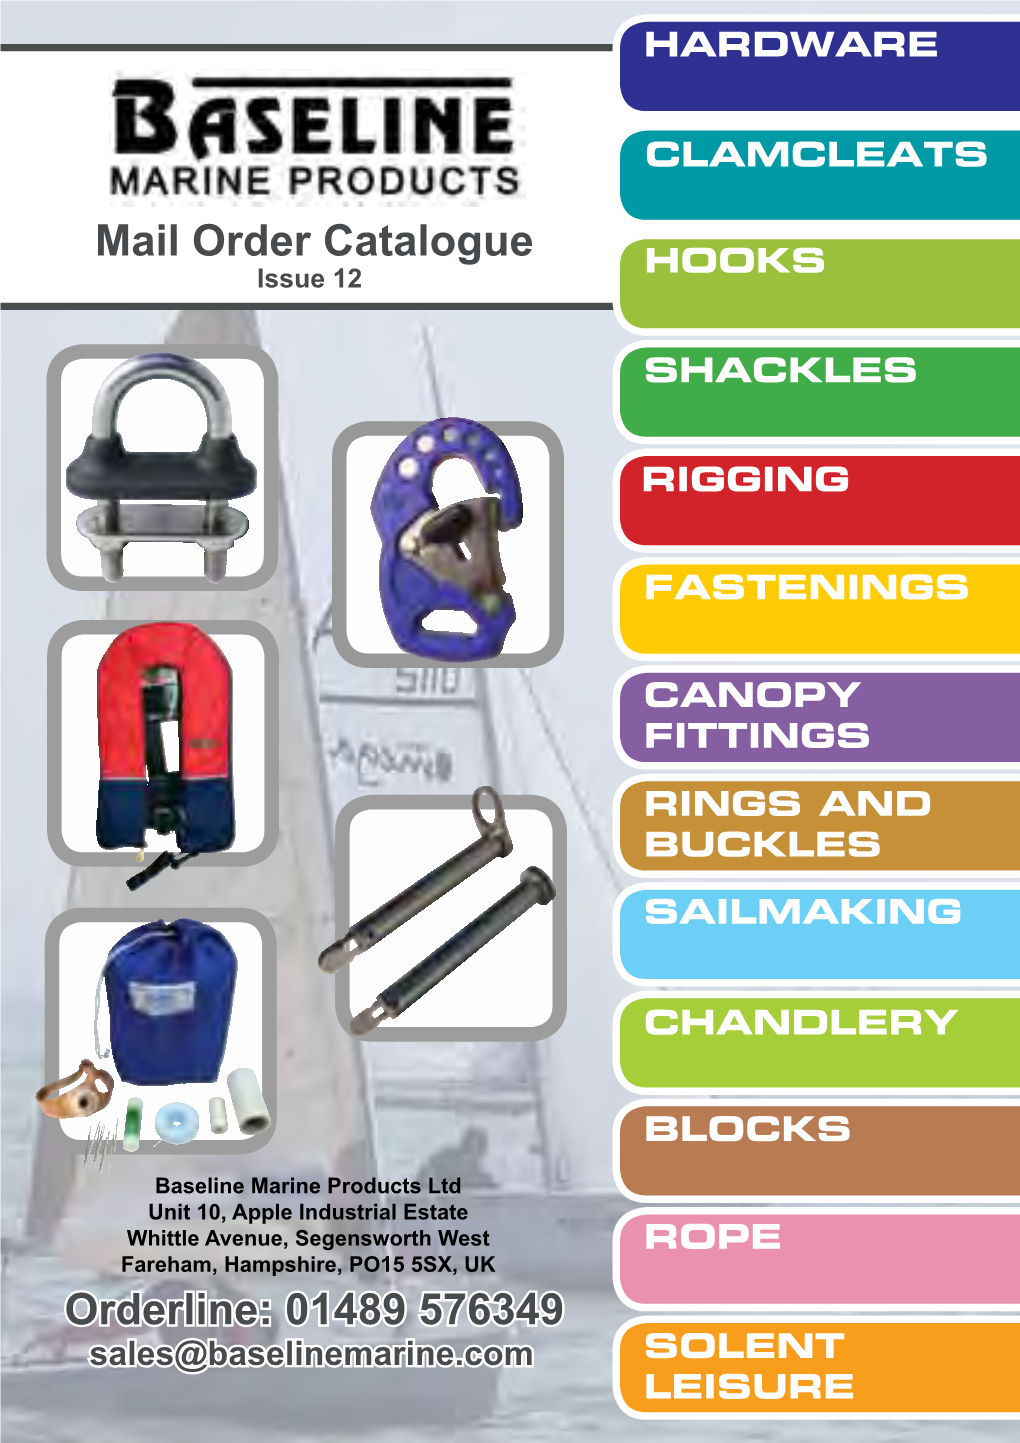 Mail Order Catalogue Orderline: 01489 576349